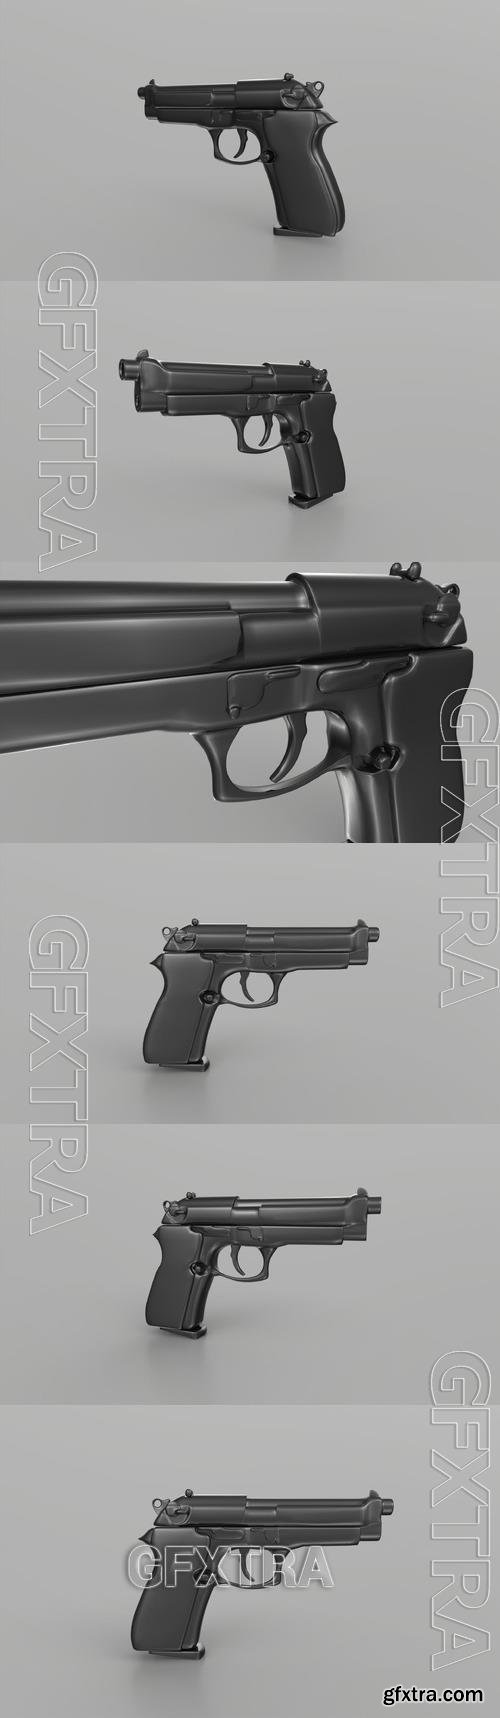 Handgun 3D Low Poly Model